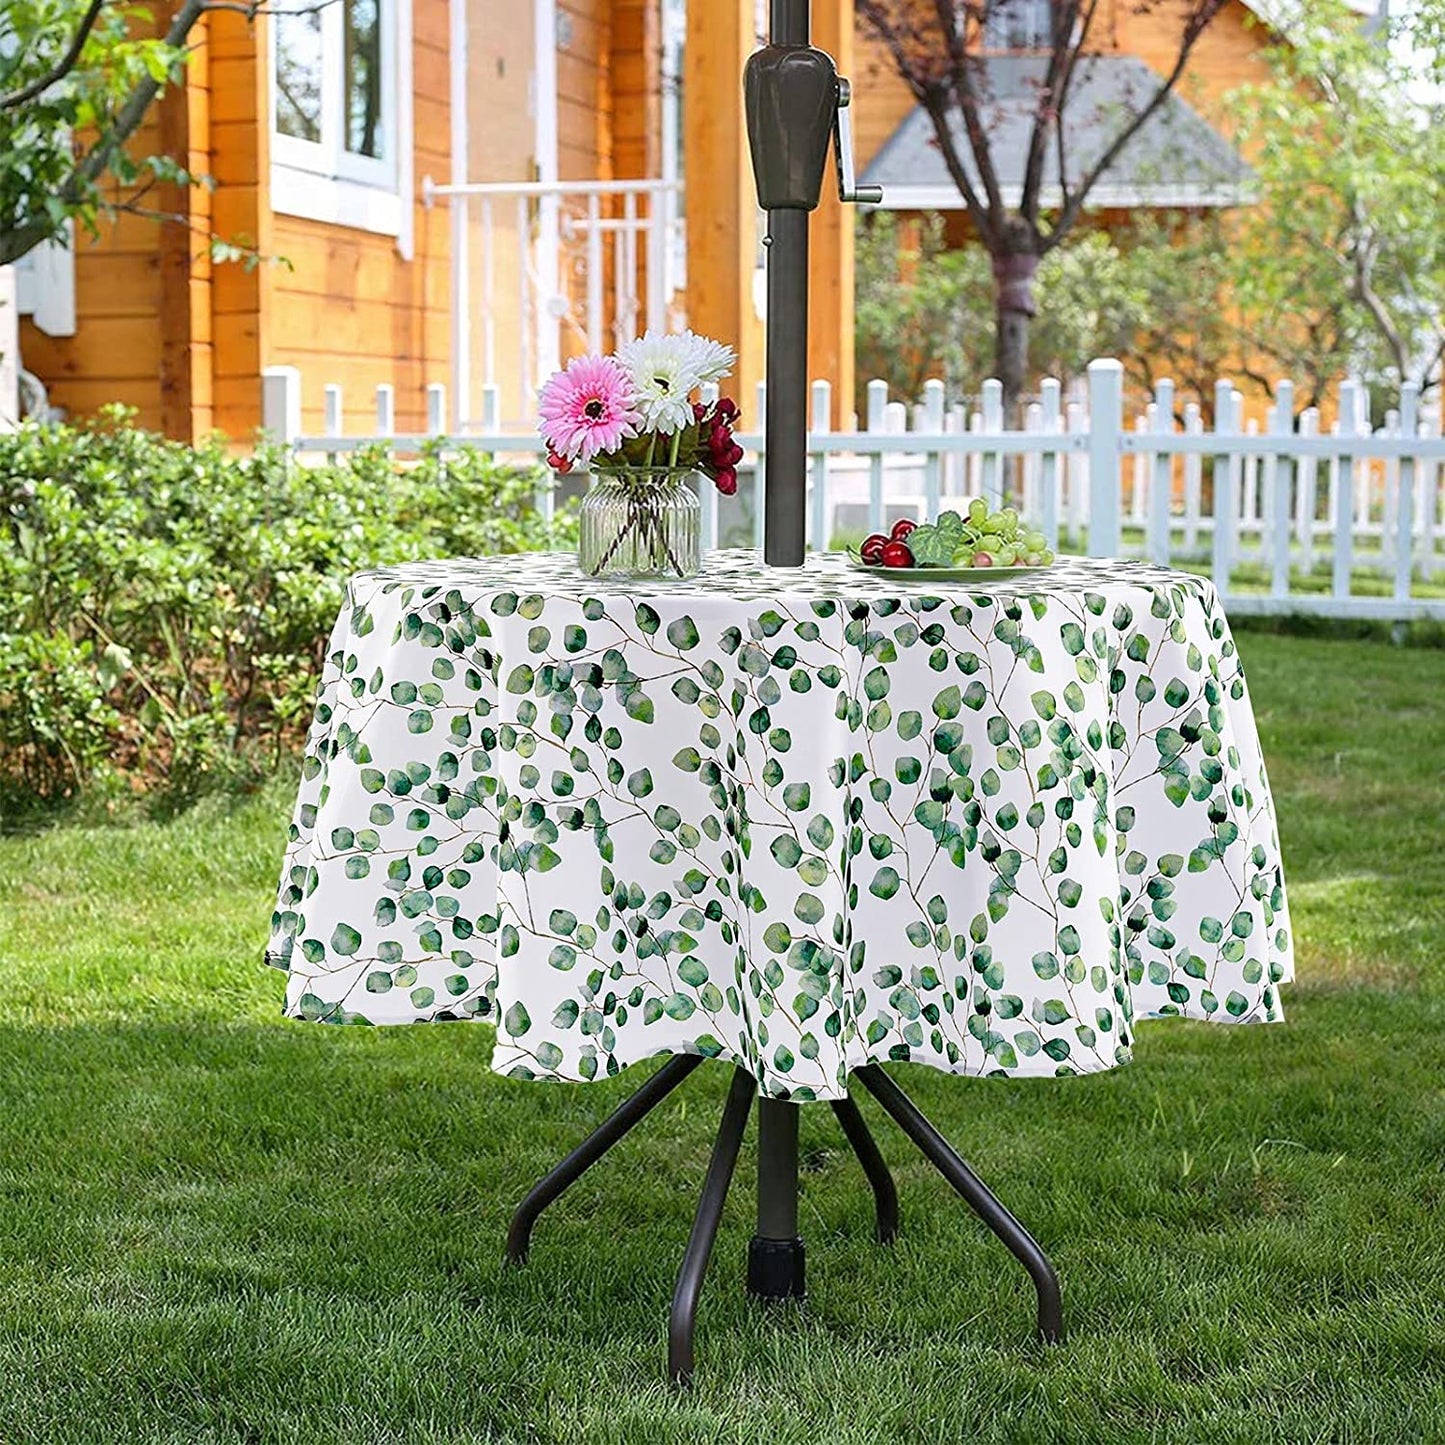 Garden Round Tablecloth 60 Inch,Outdoor Tablecloth